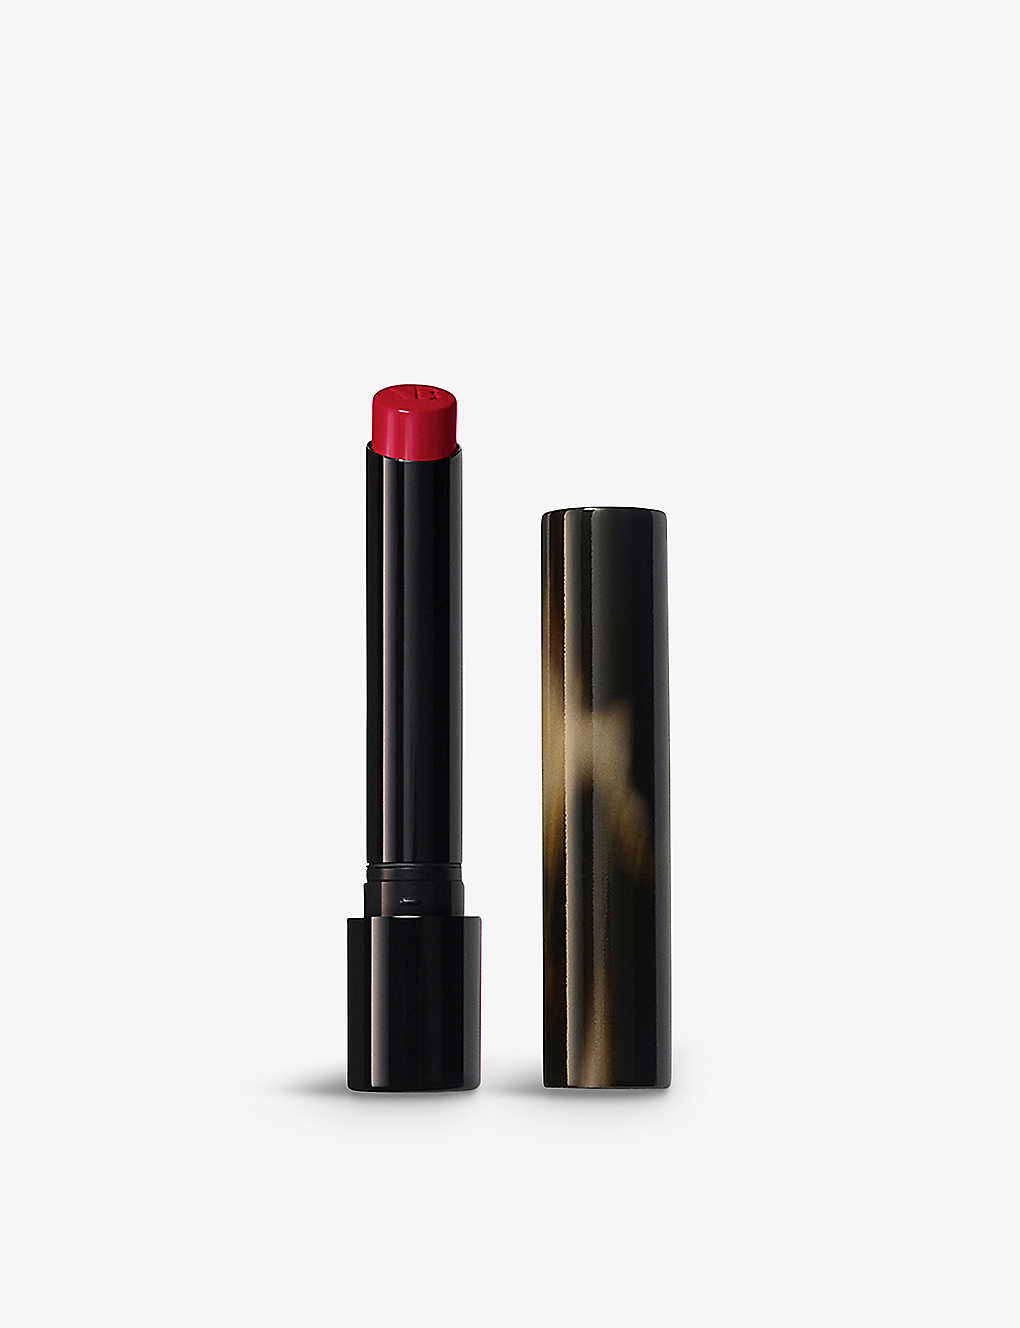 Victoria Beckham Beauty Pop Posh Lipstick 1.9g